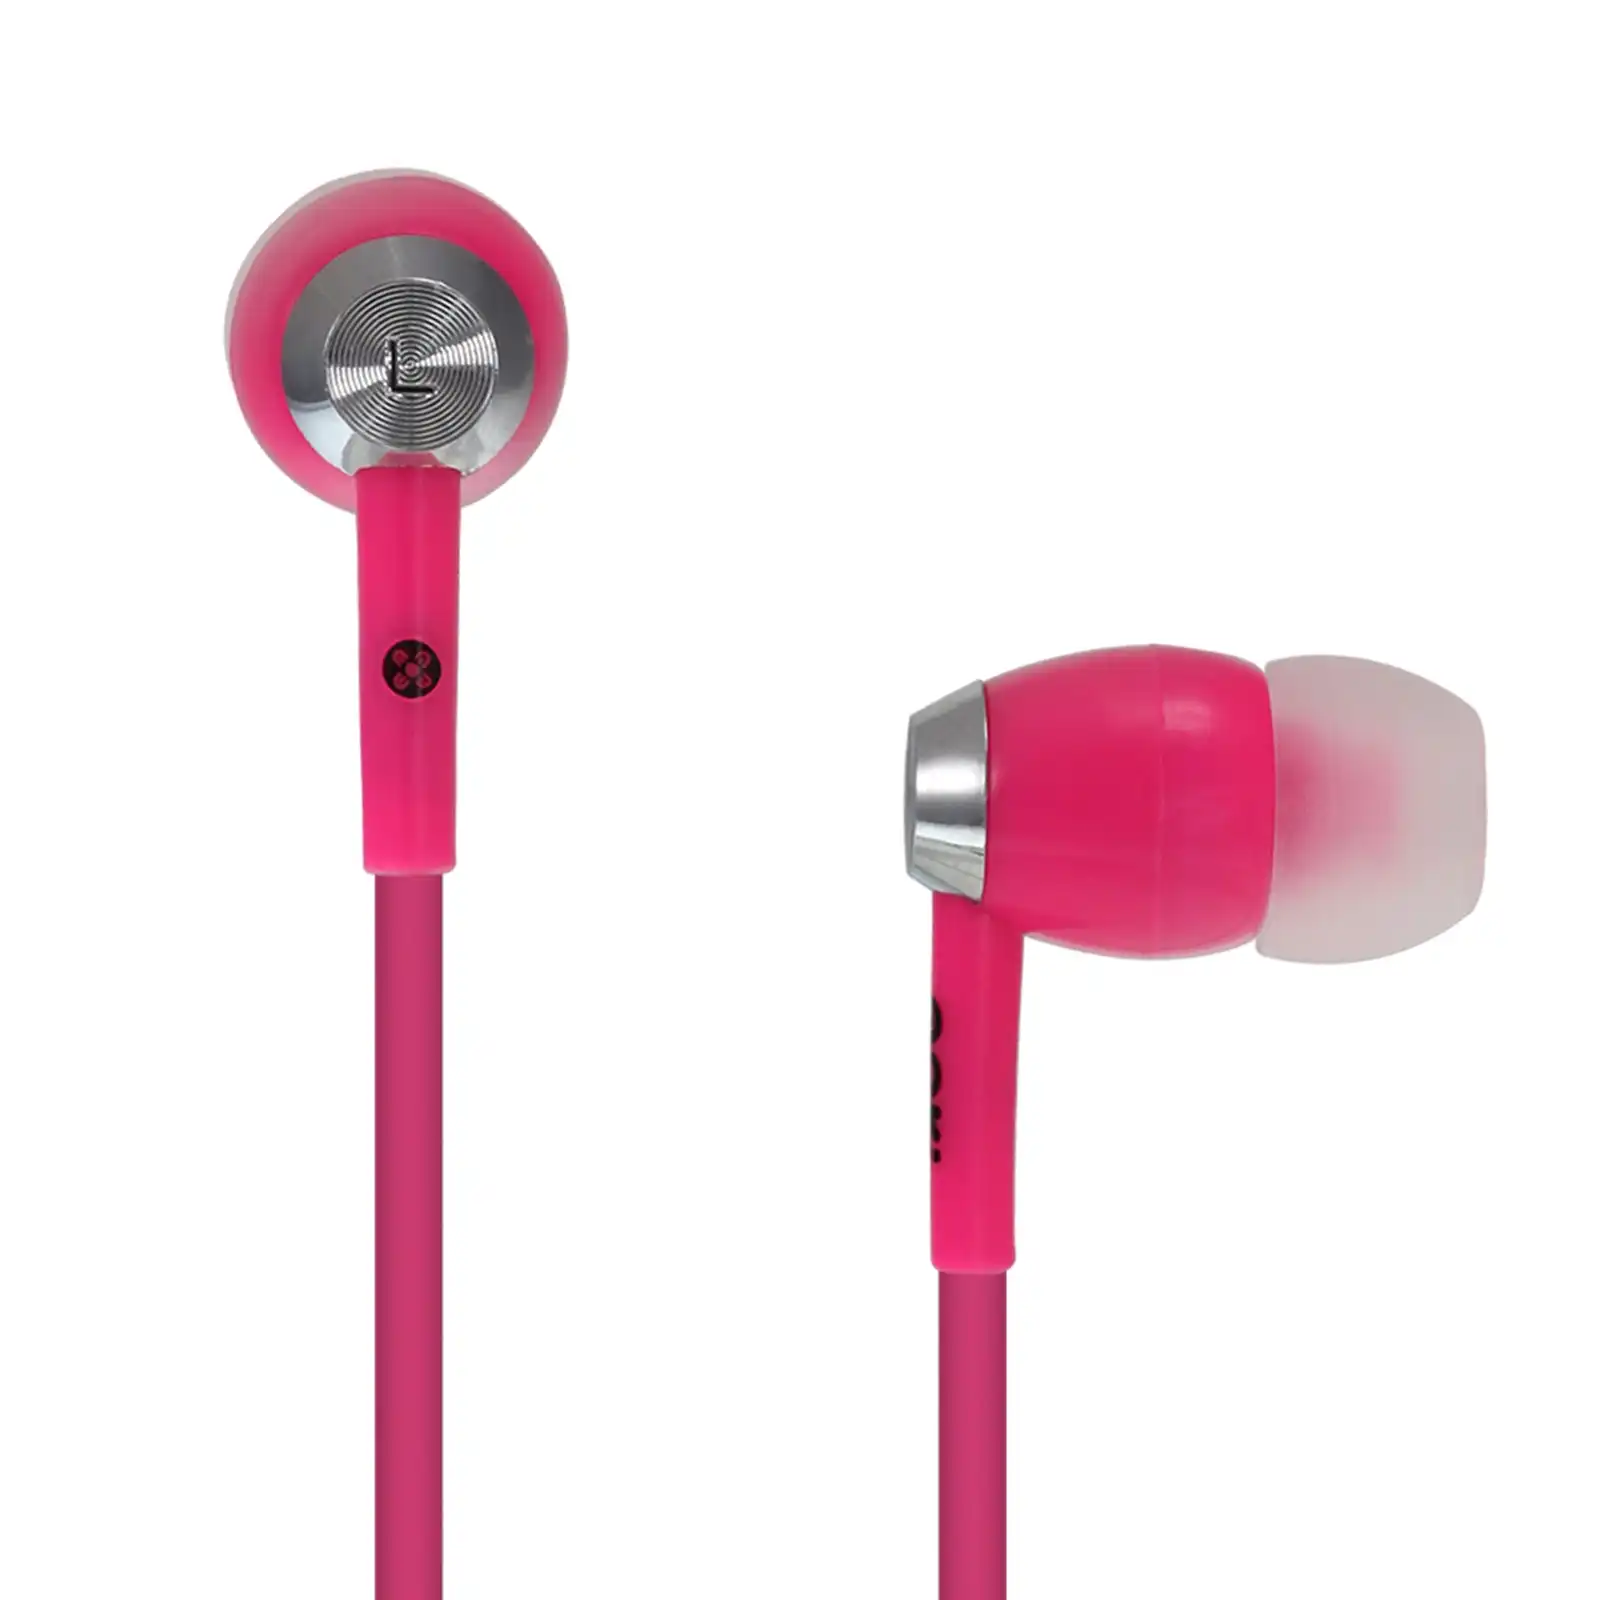 Moki Noise Isolation Hyperbuds Headphones 3.5mm Earphones for iPhone/Android PK